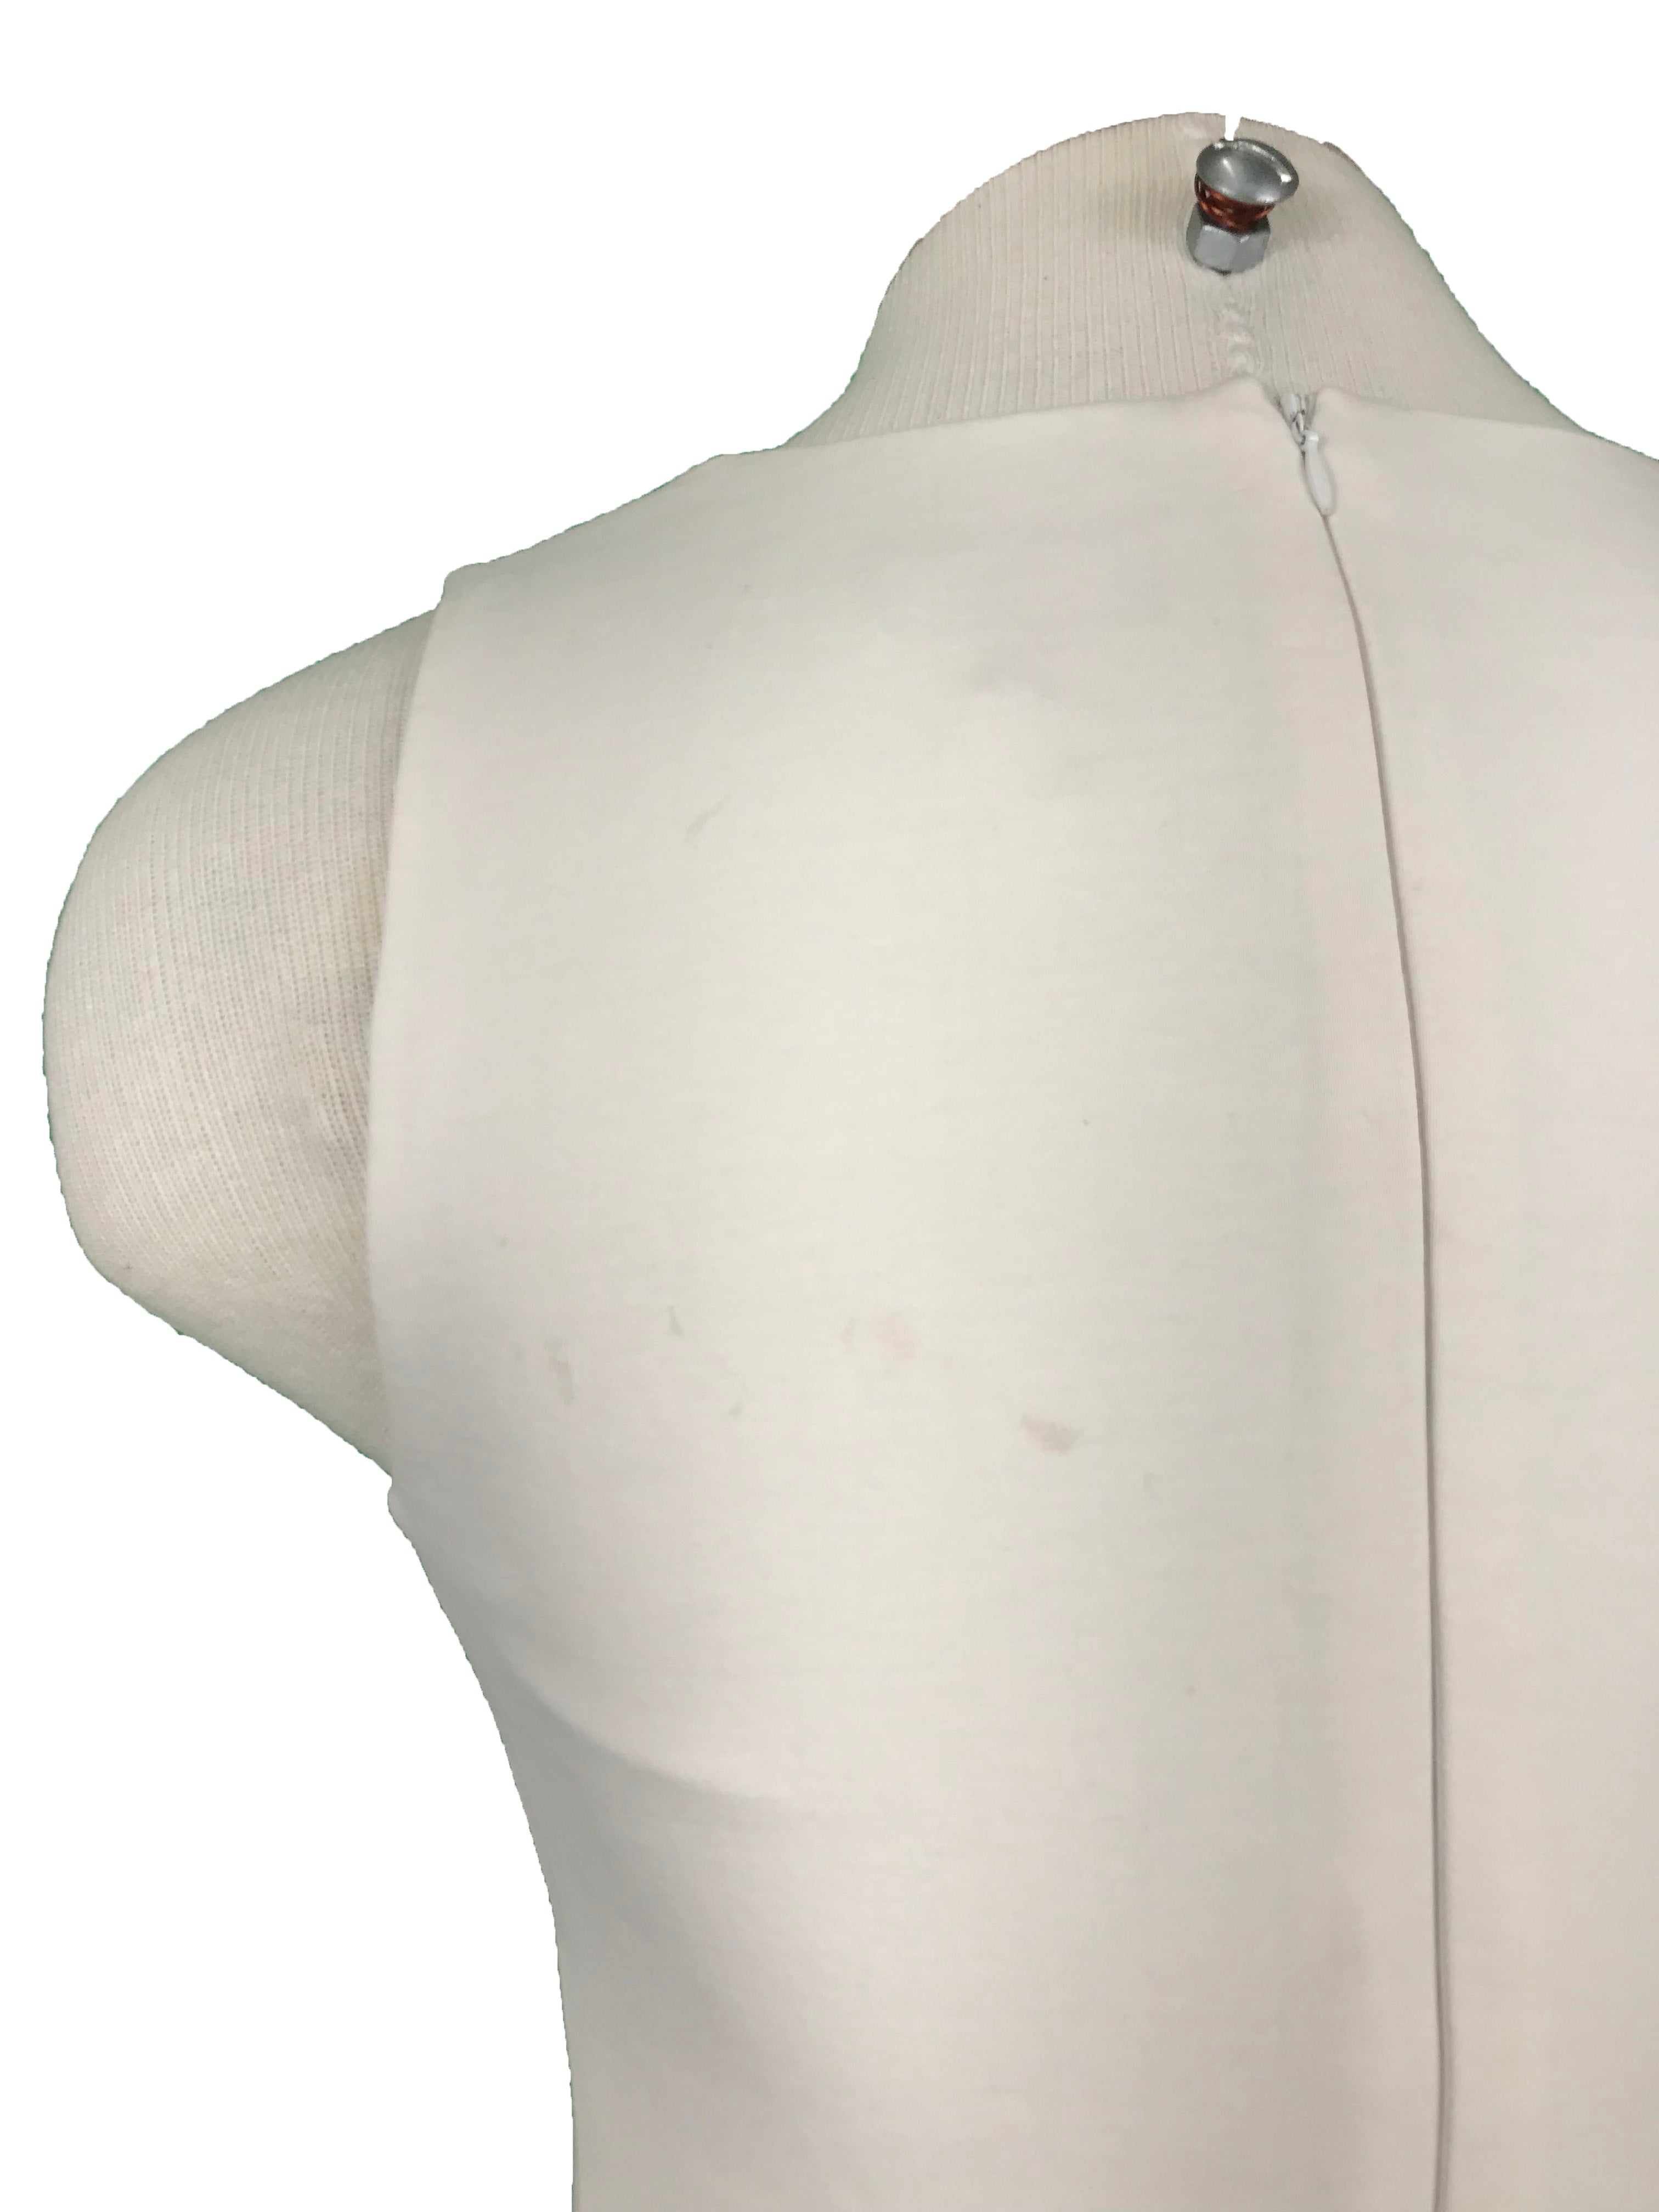 Armani Jeans White Sleeveless Dress Women's Size 40